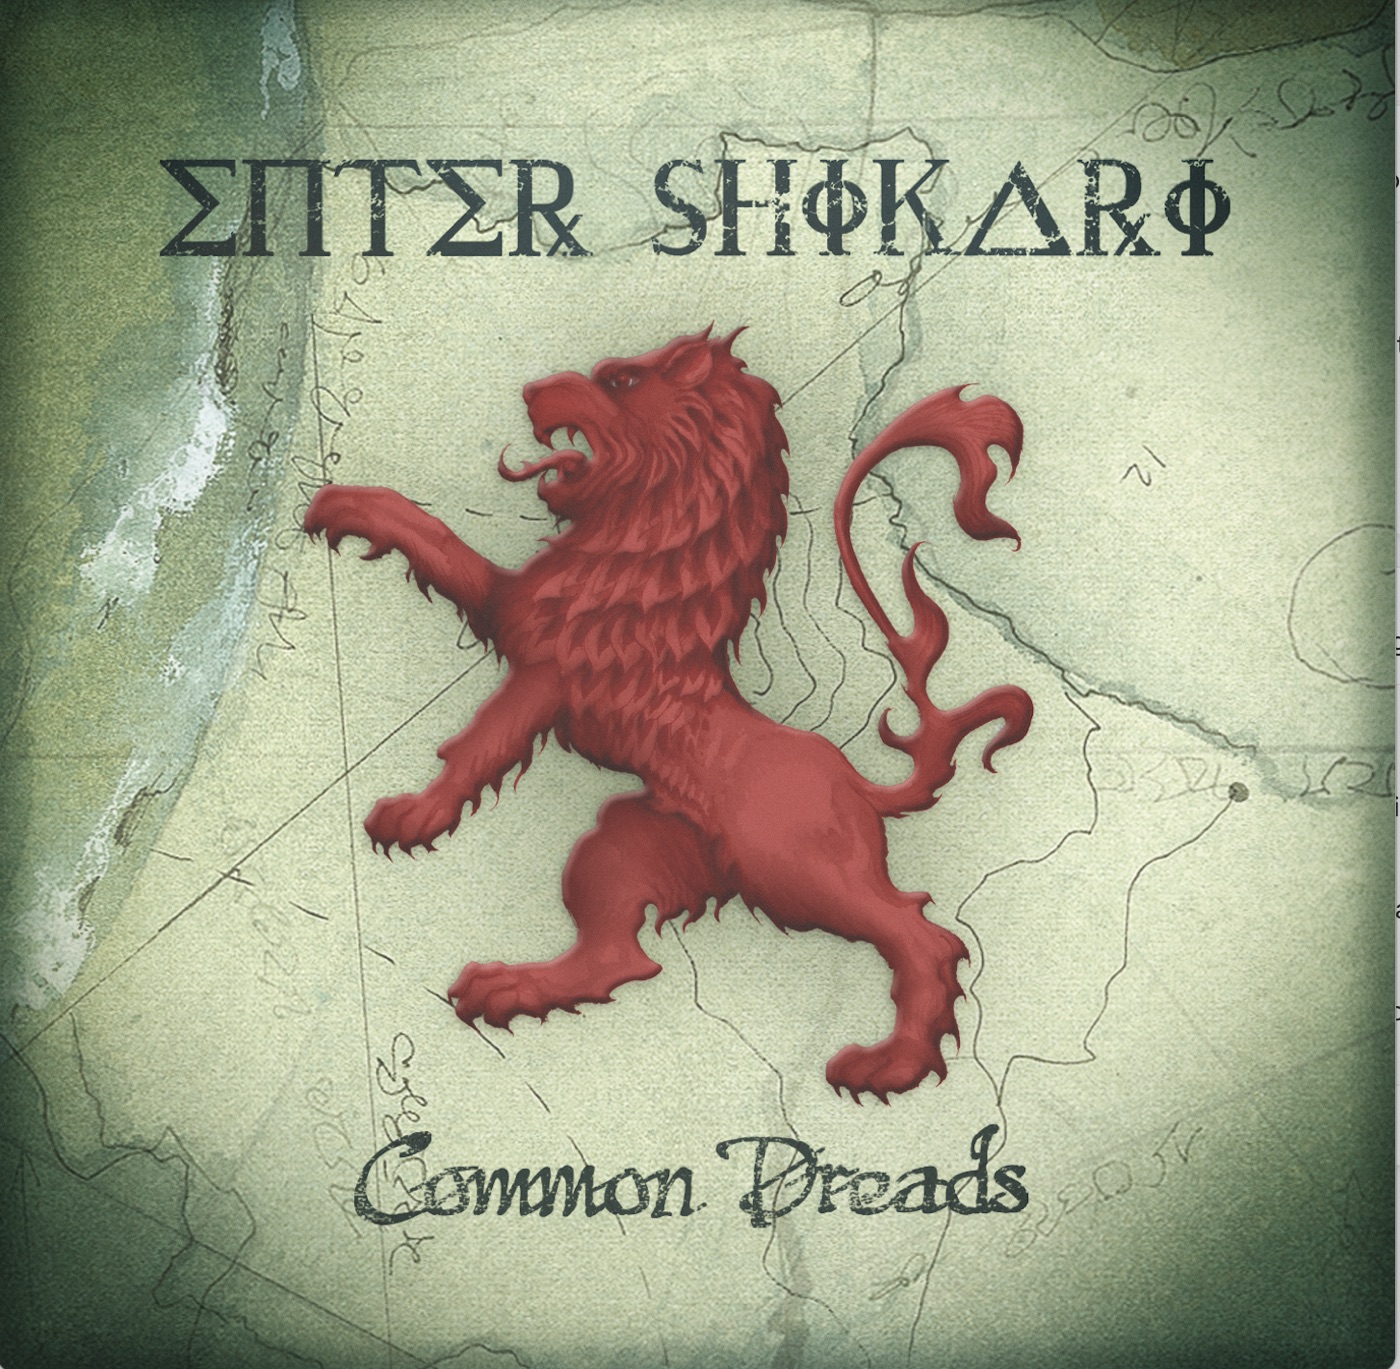 Common Dreads by Enter Shikari